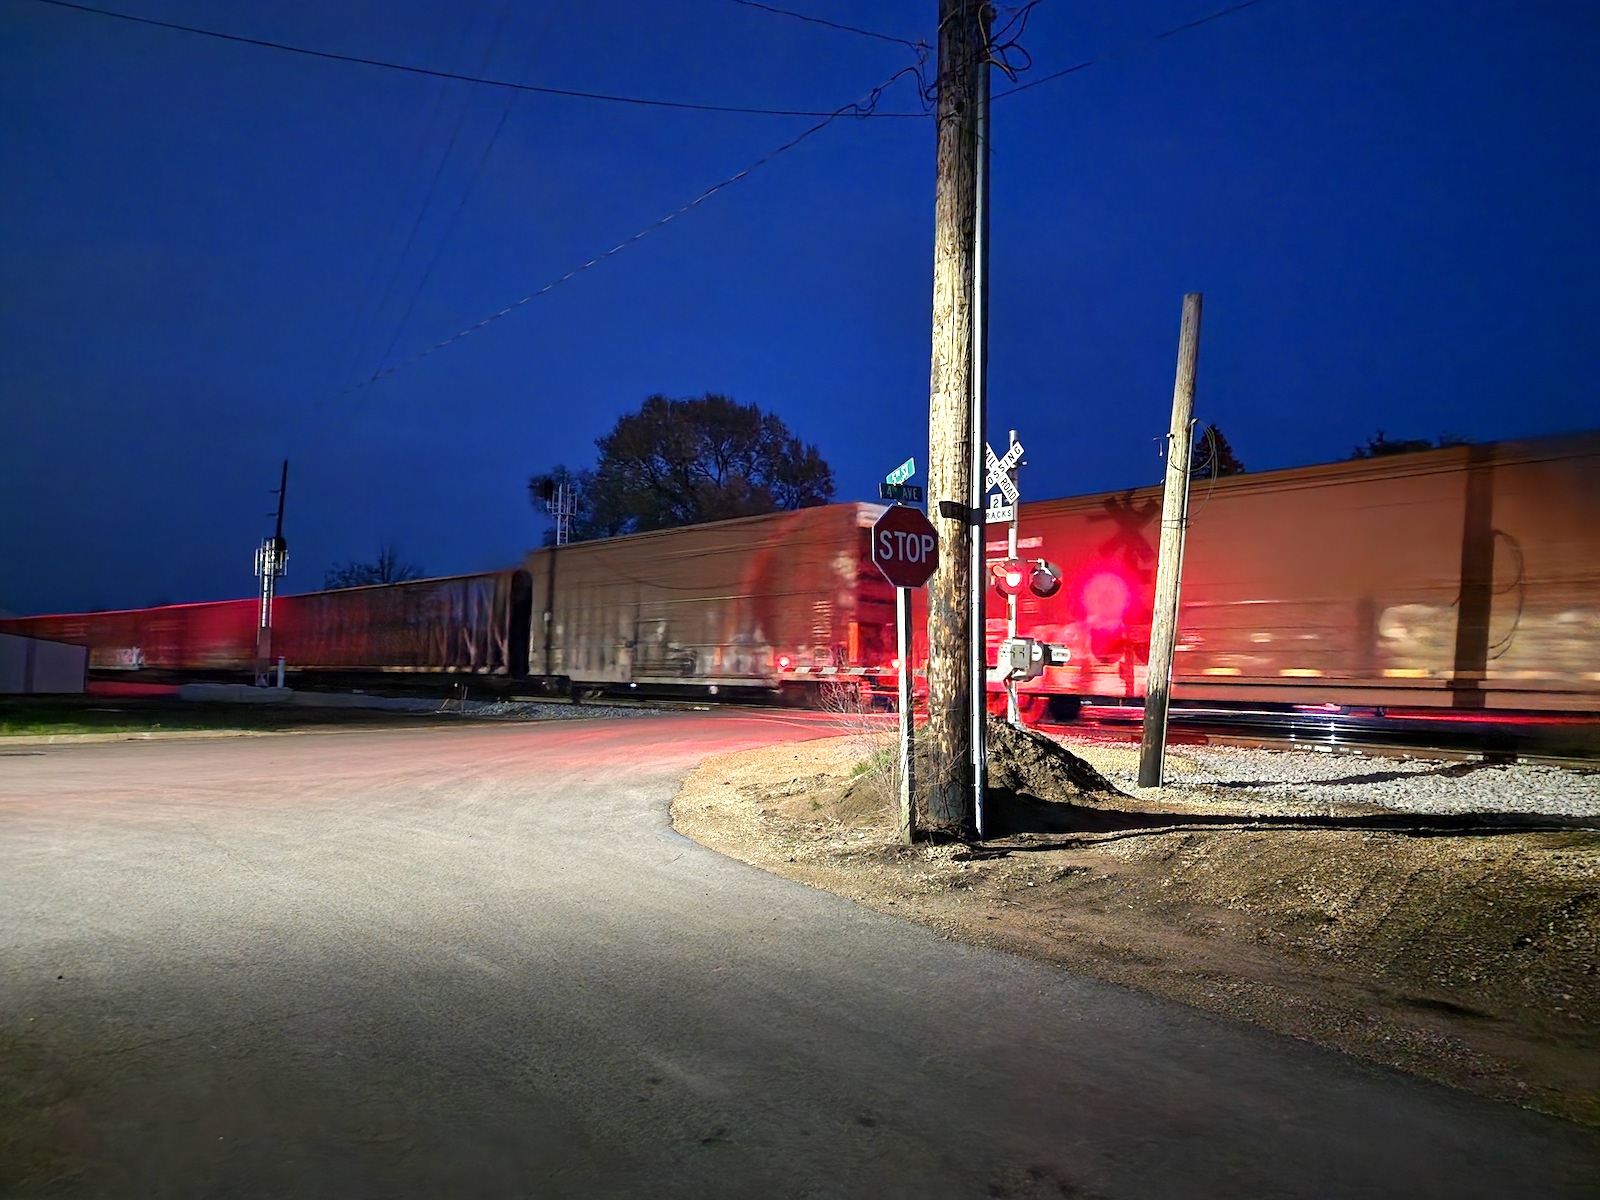 a blurry train goes through a railroad crossing at night